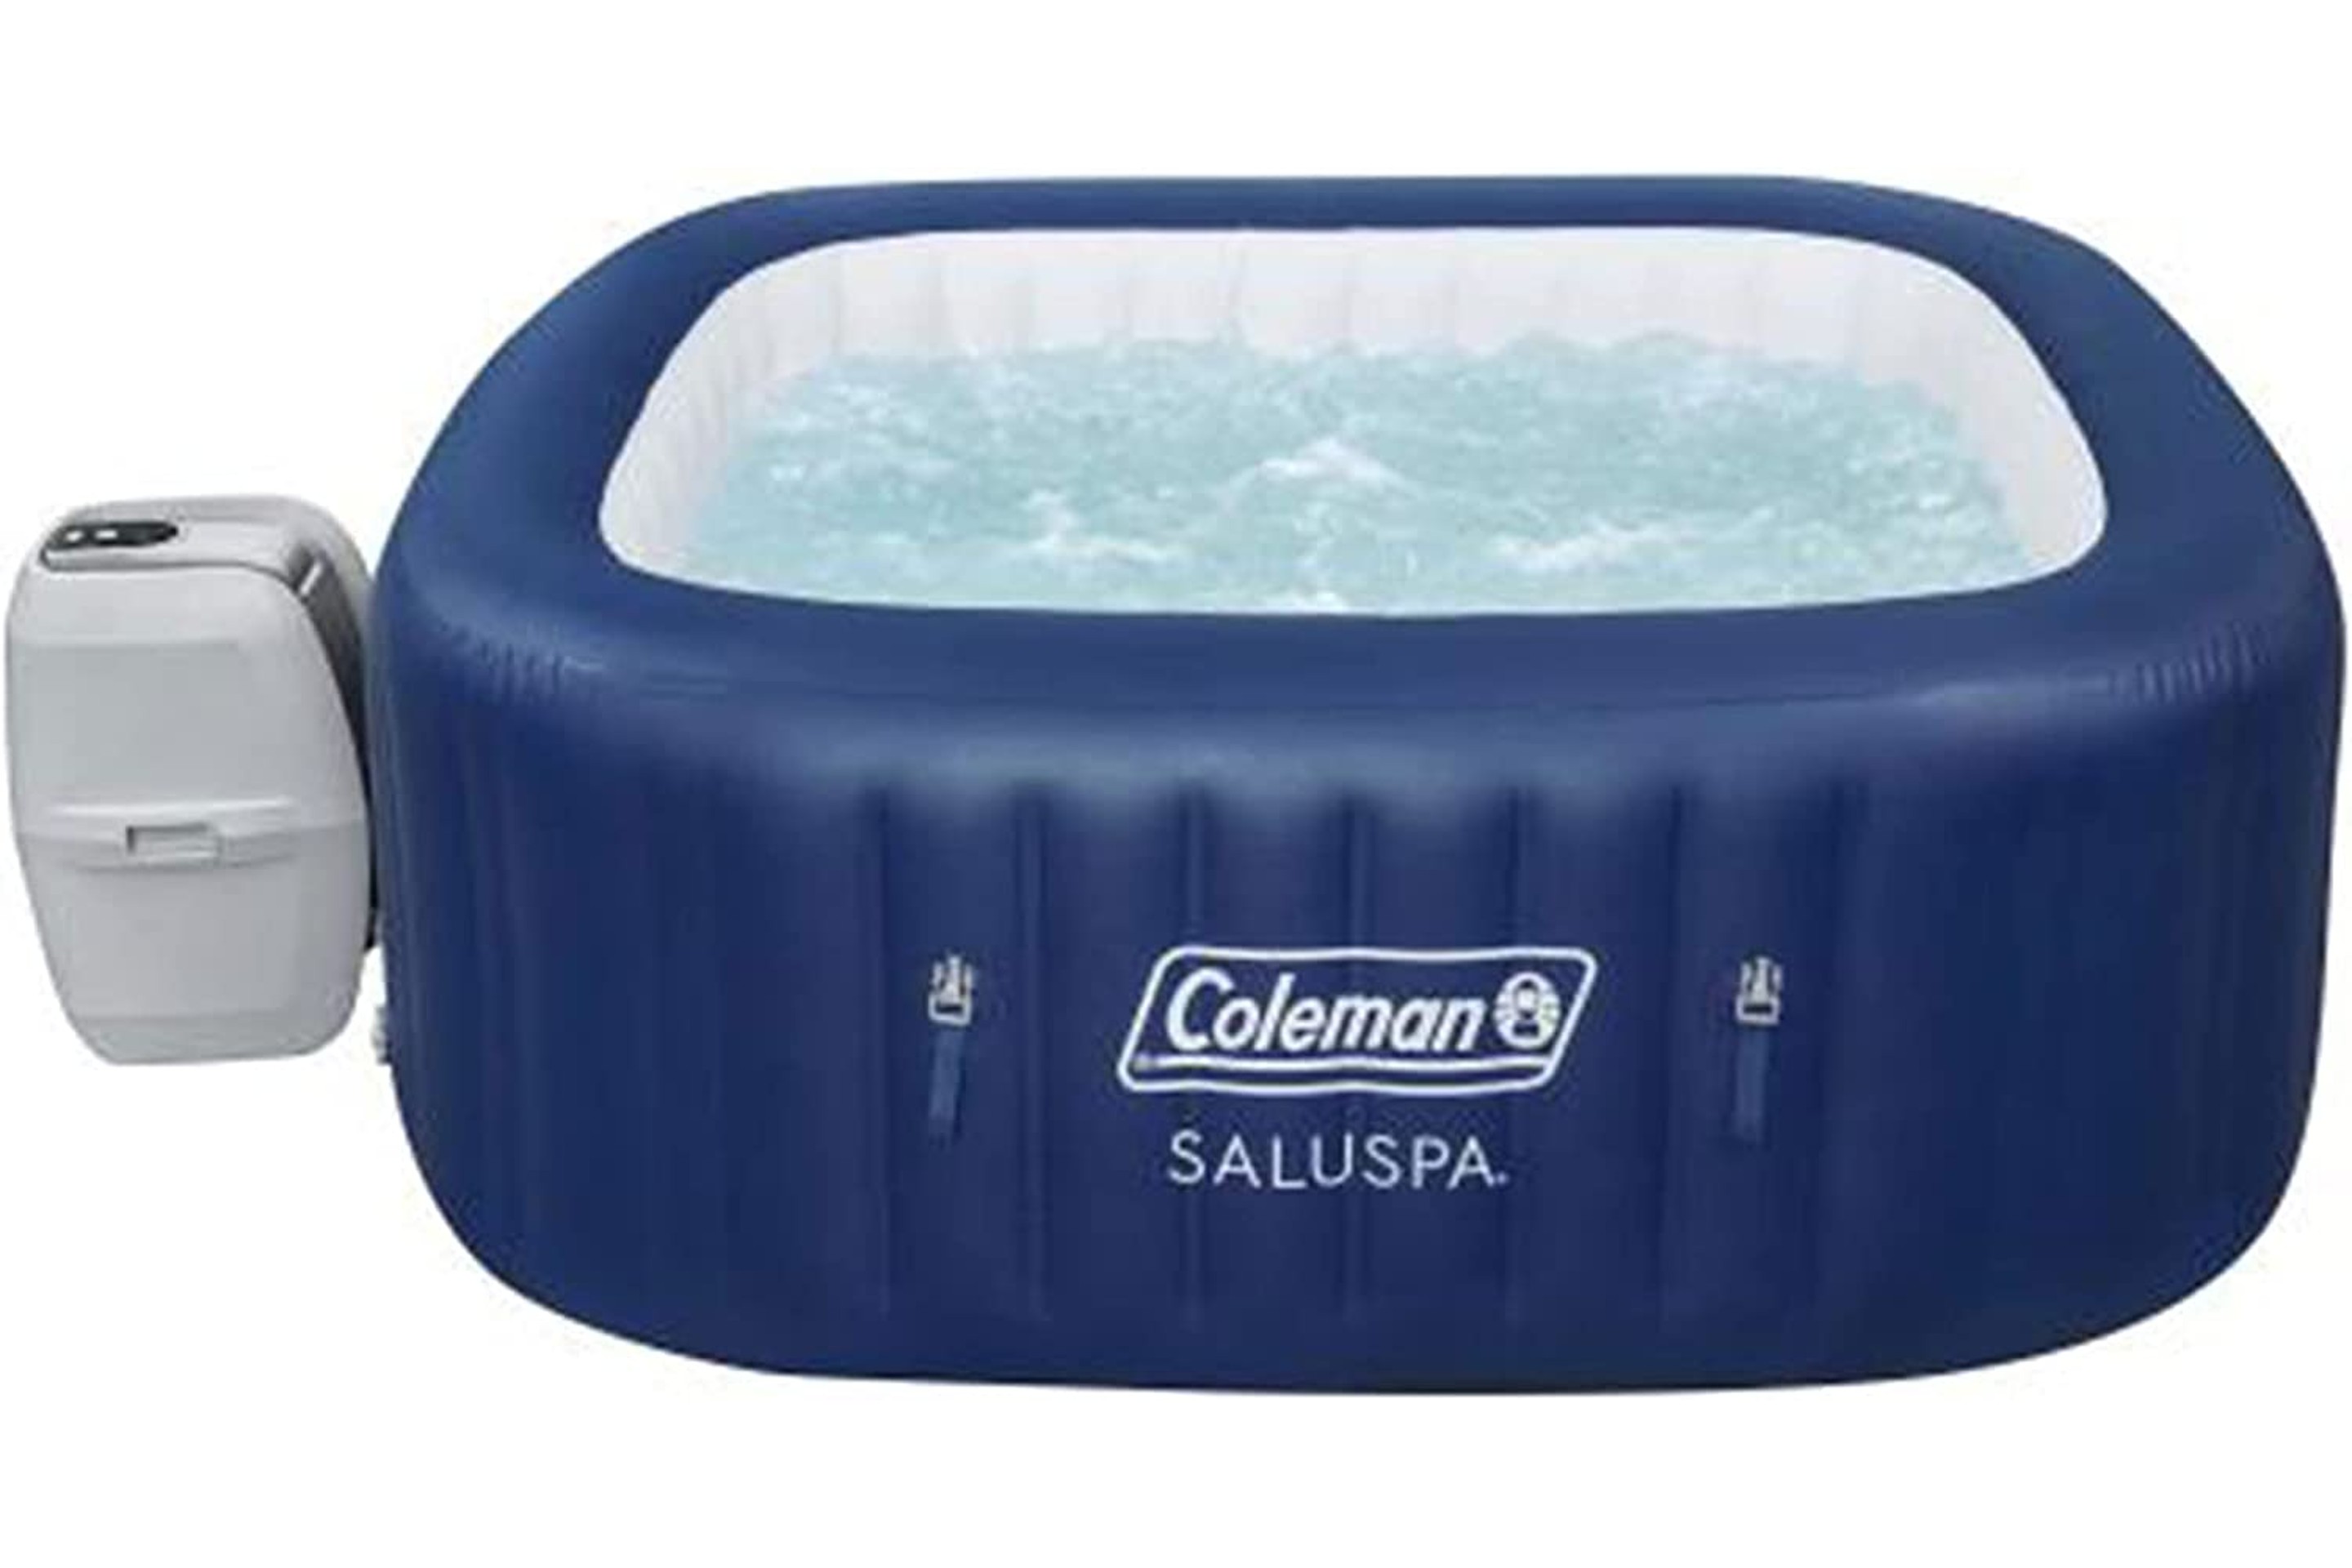 Coleman Atlantis SaluSpa Hot Tub